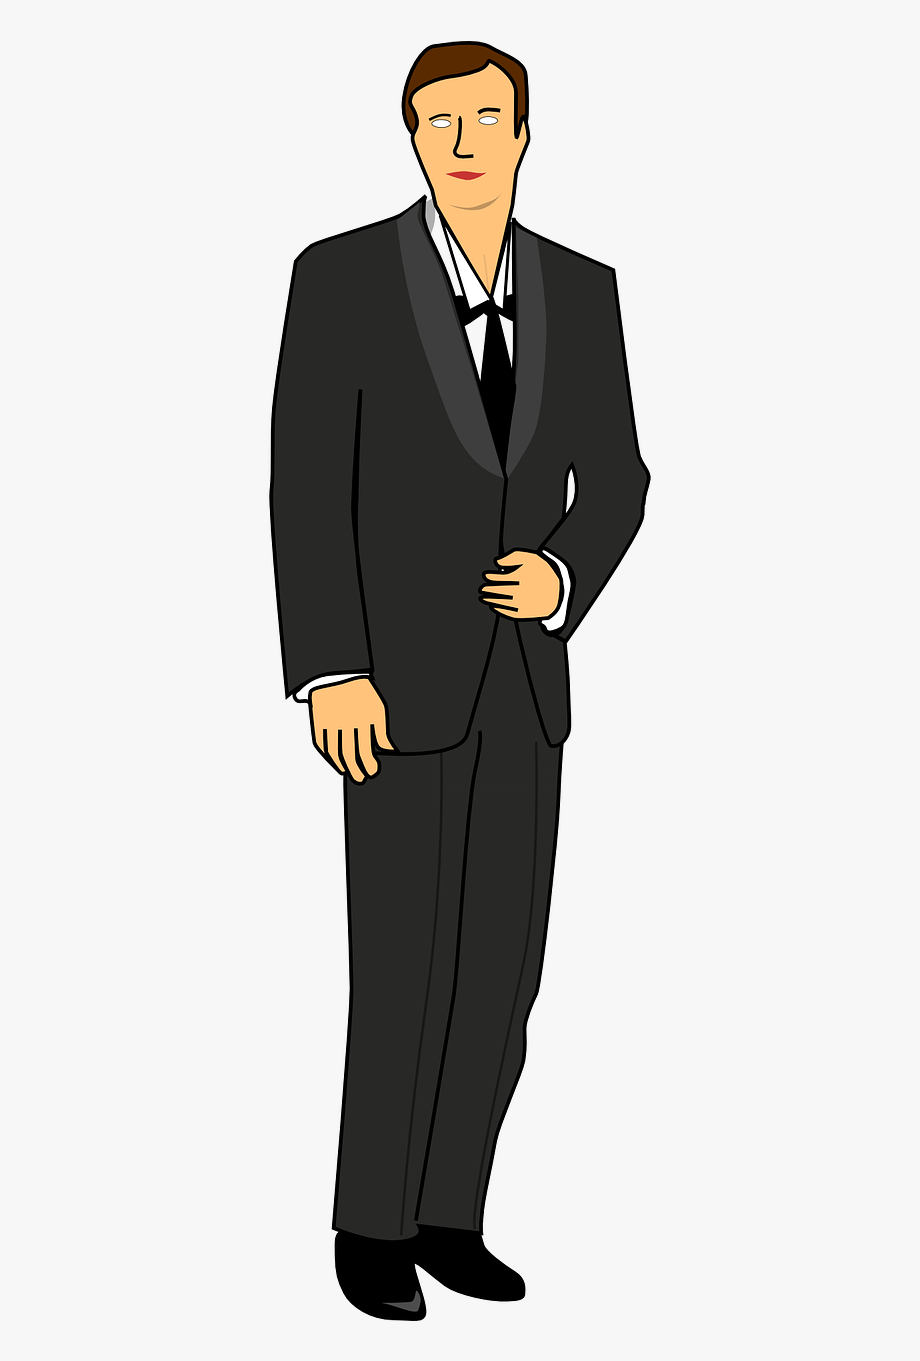 Groom clipart suited man. Businessman image pinterest clip